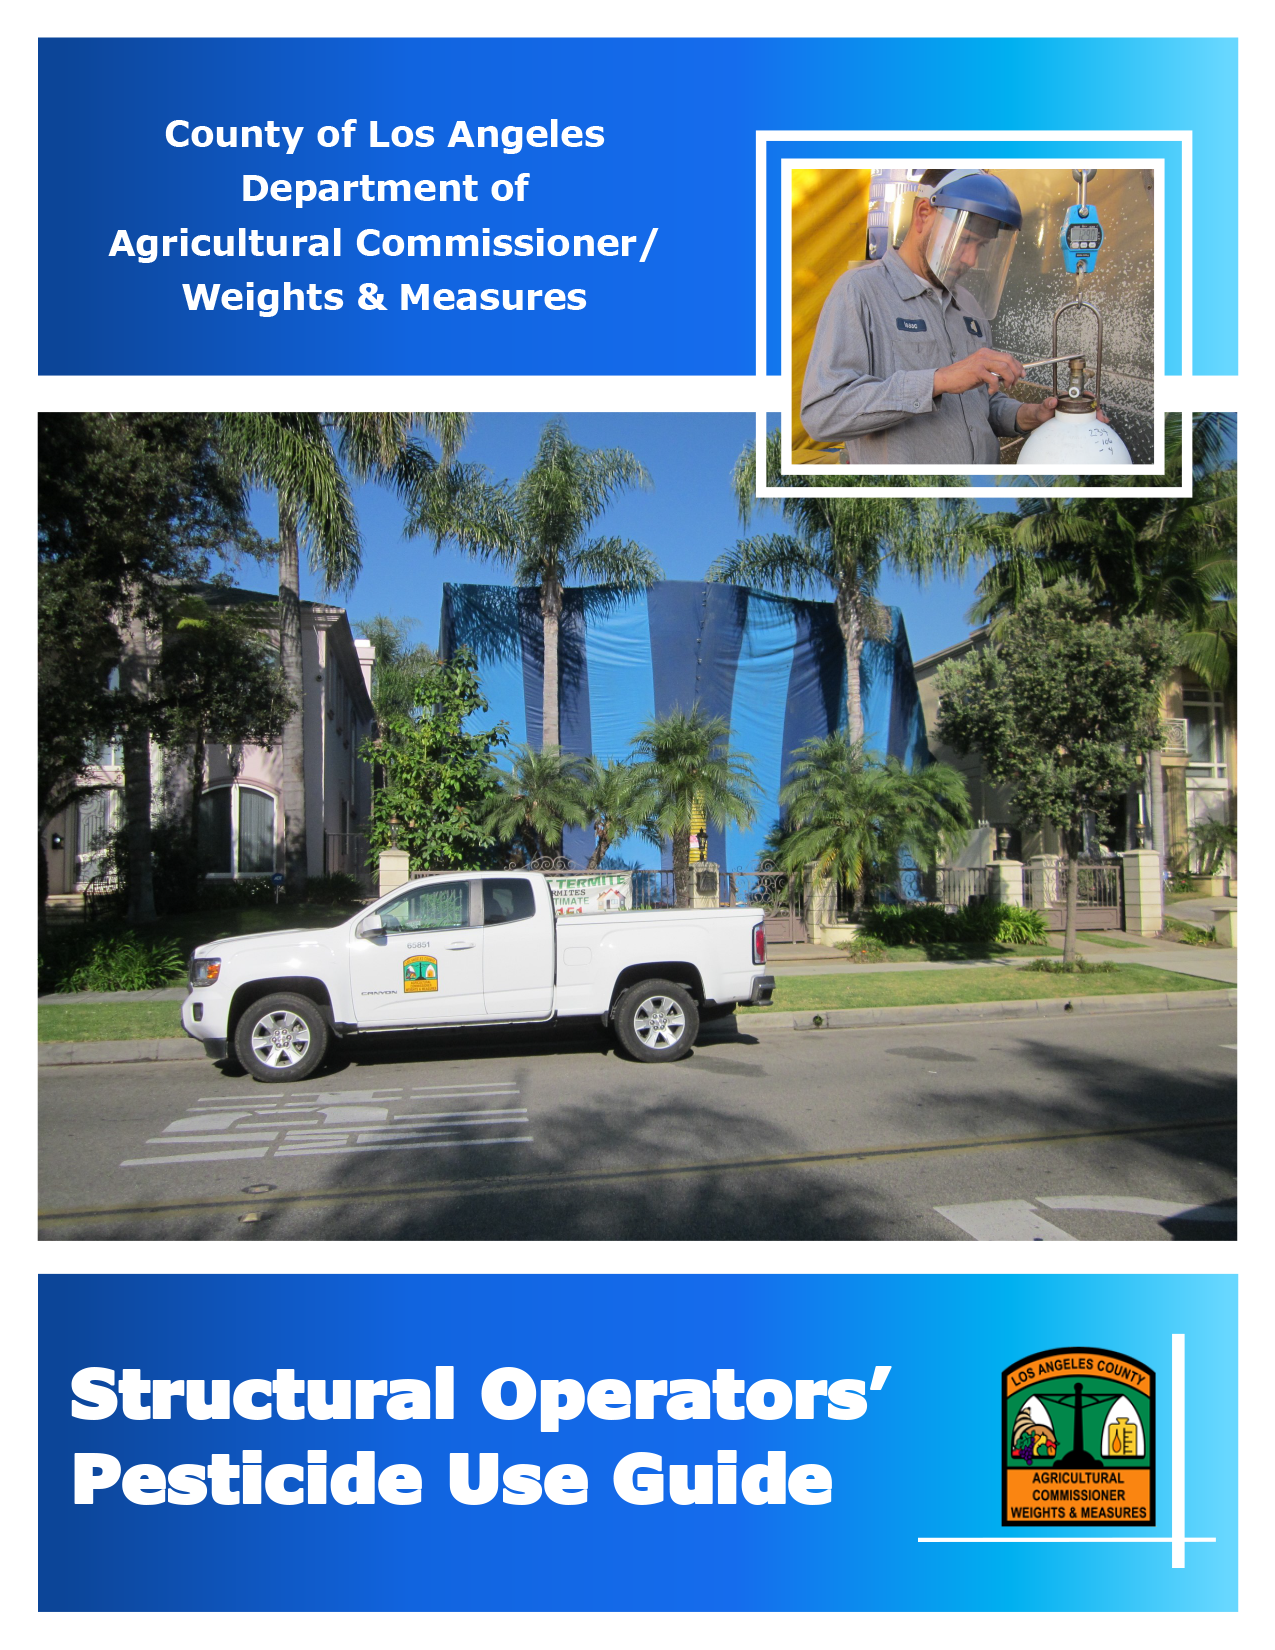 Structural Operators